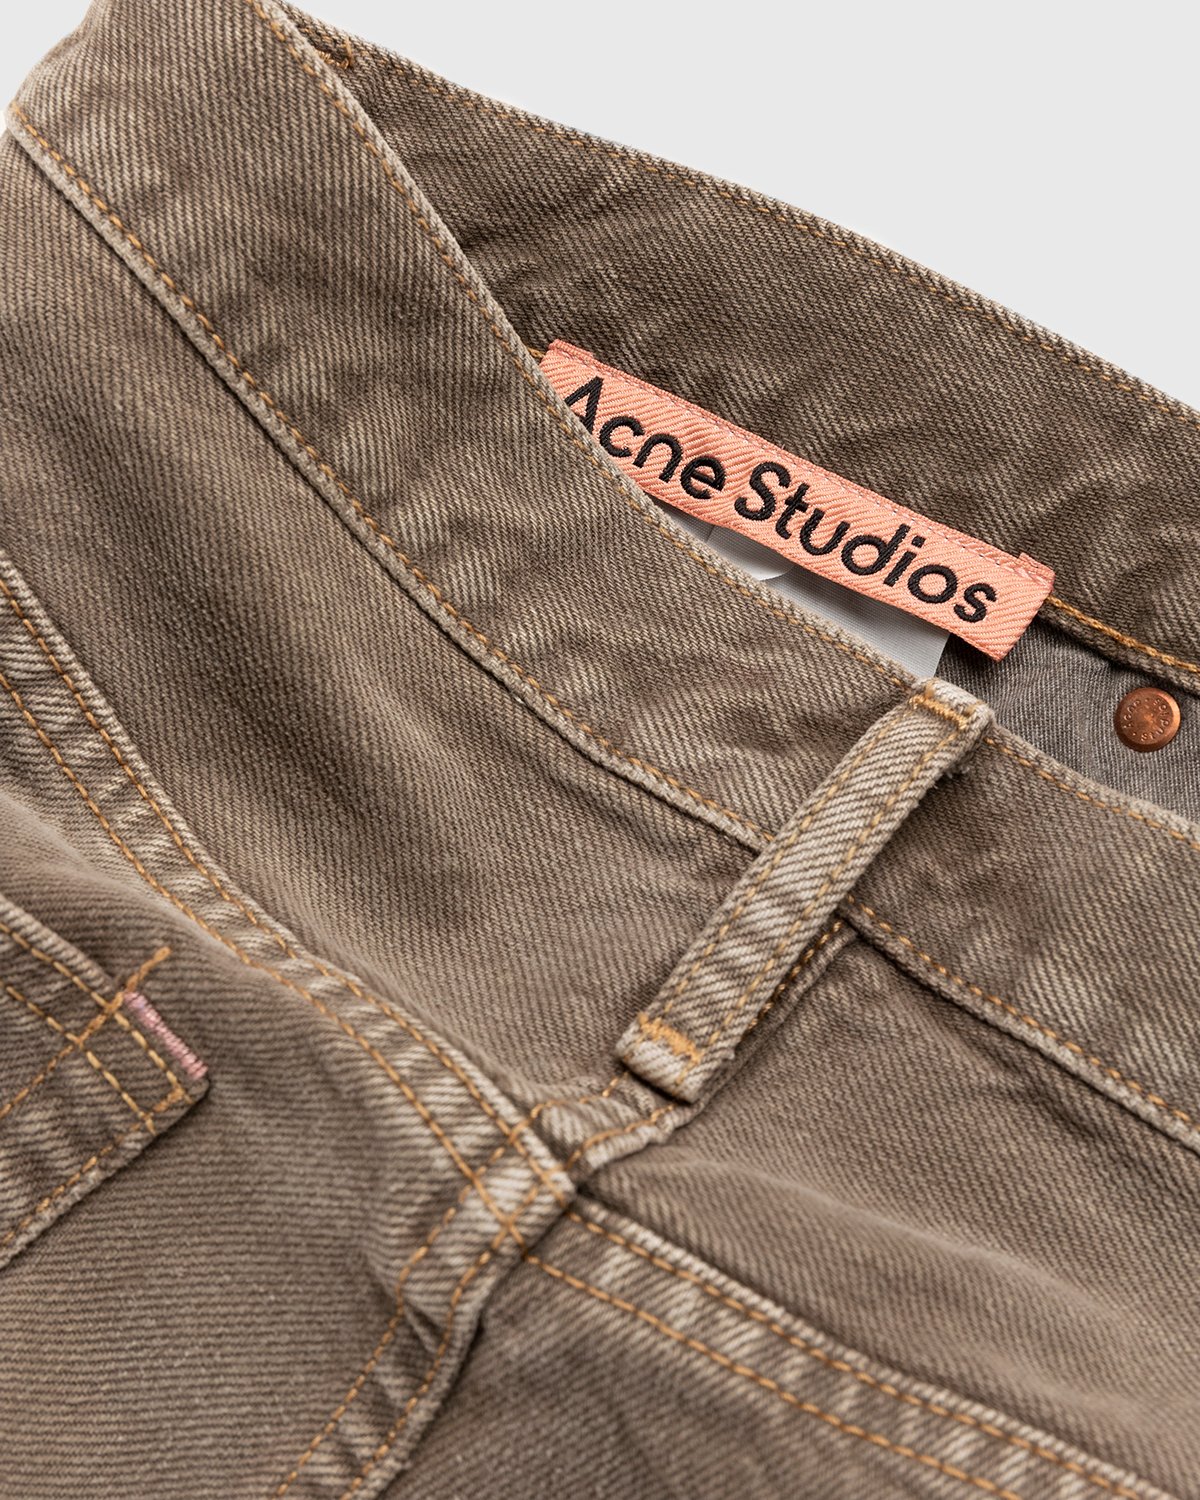 Acne Studios - 1996 Dust Devil Jeans Beige - Clothing - Beige - Image 5